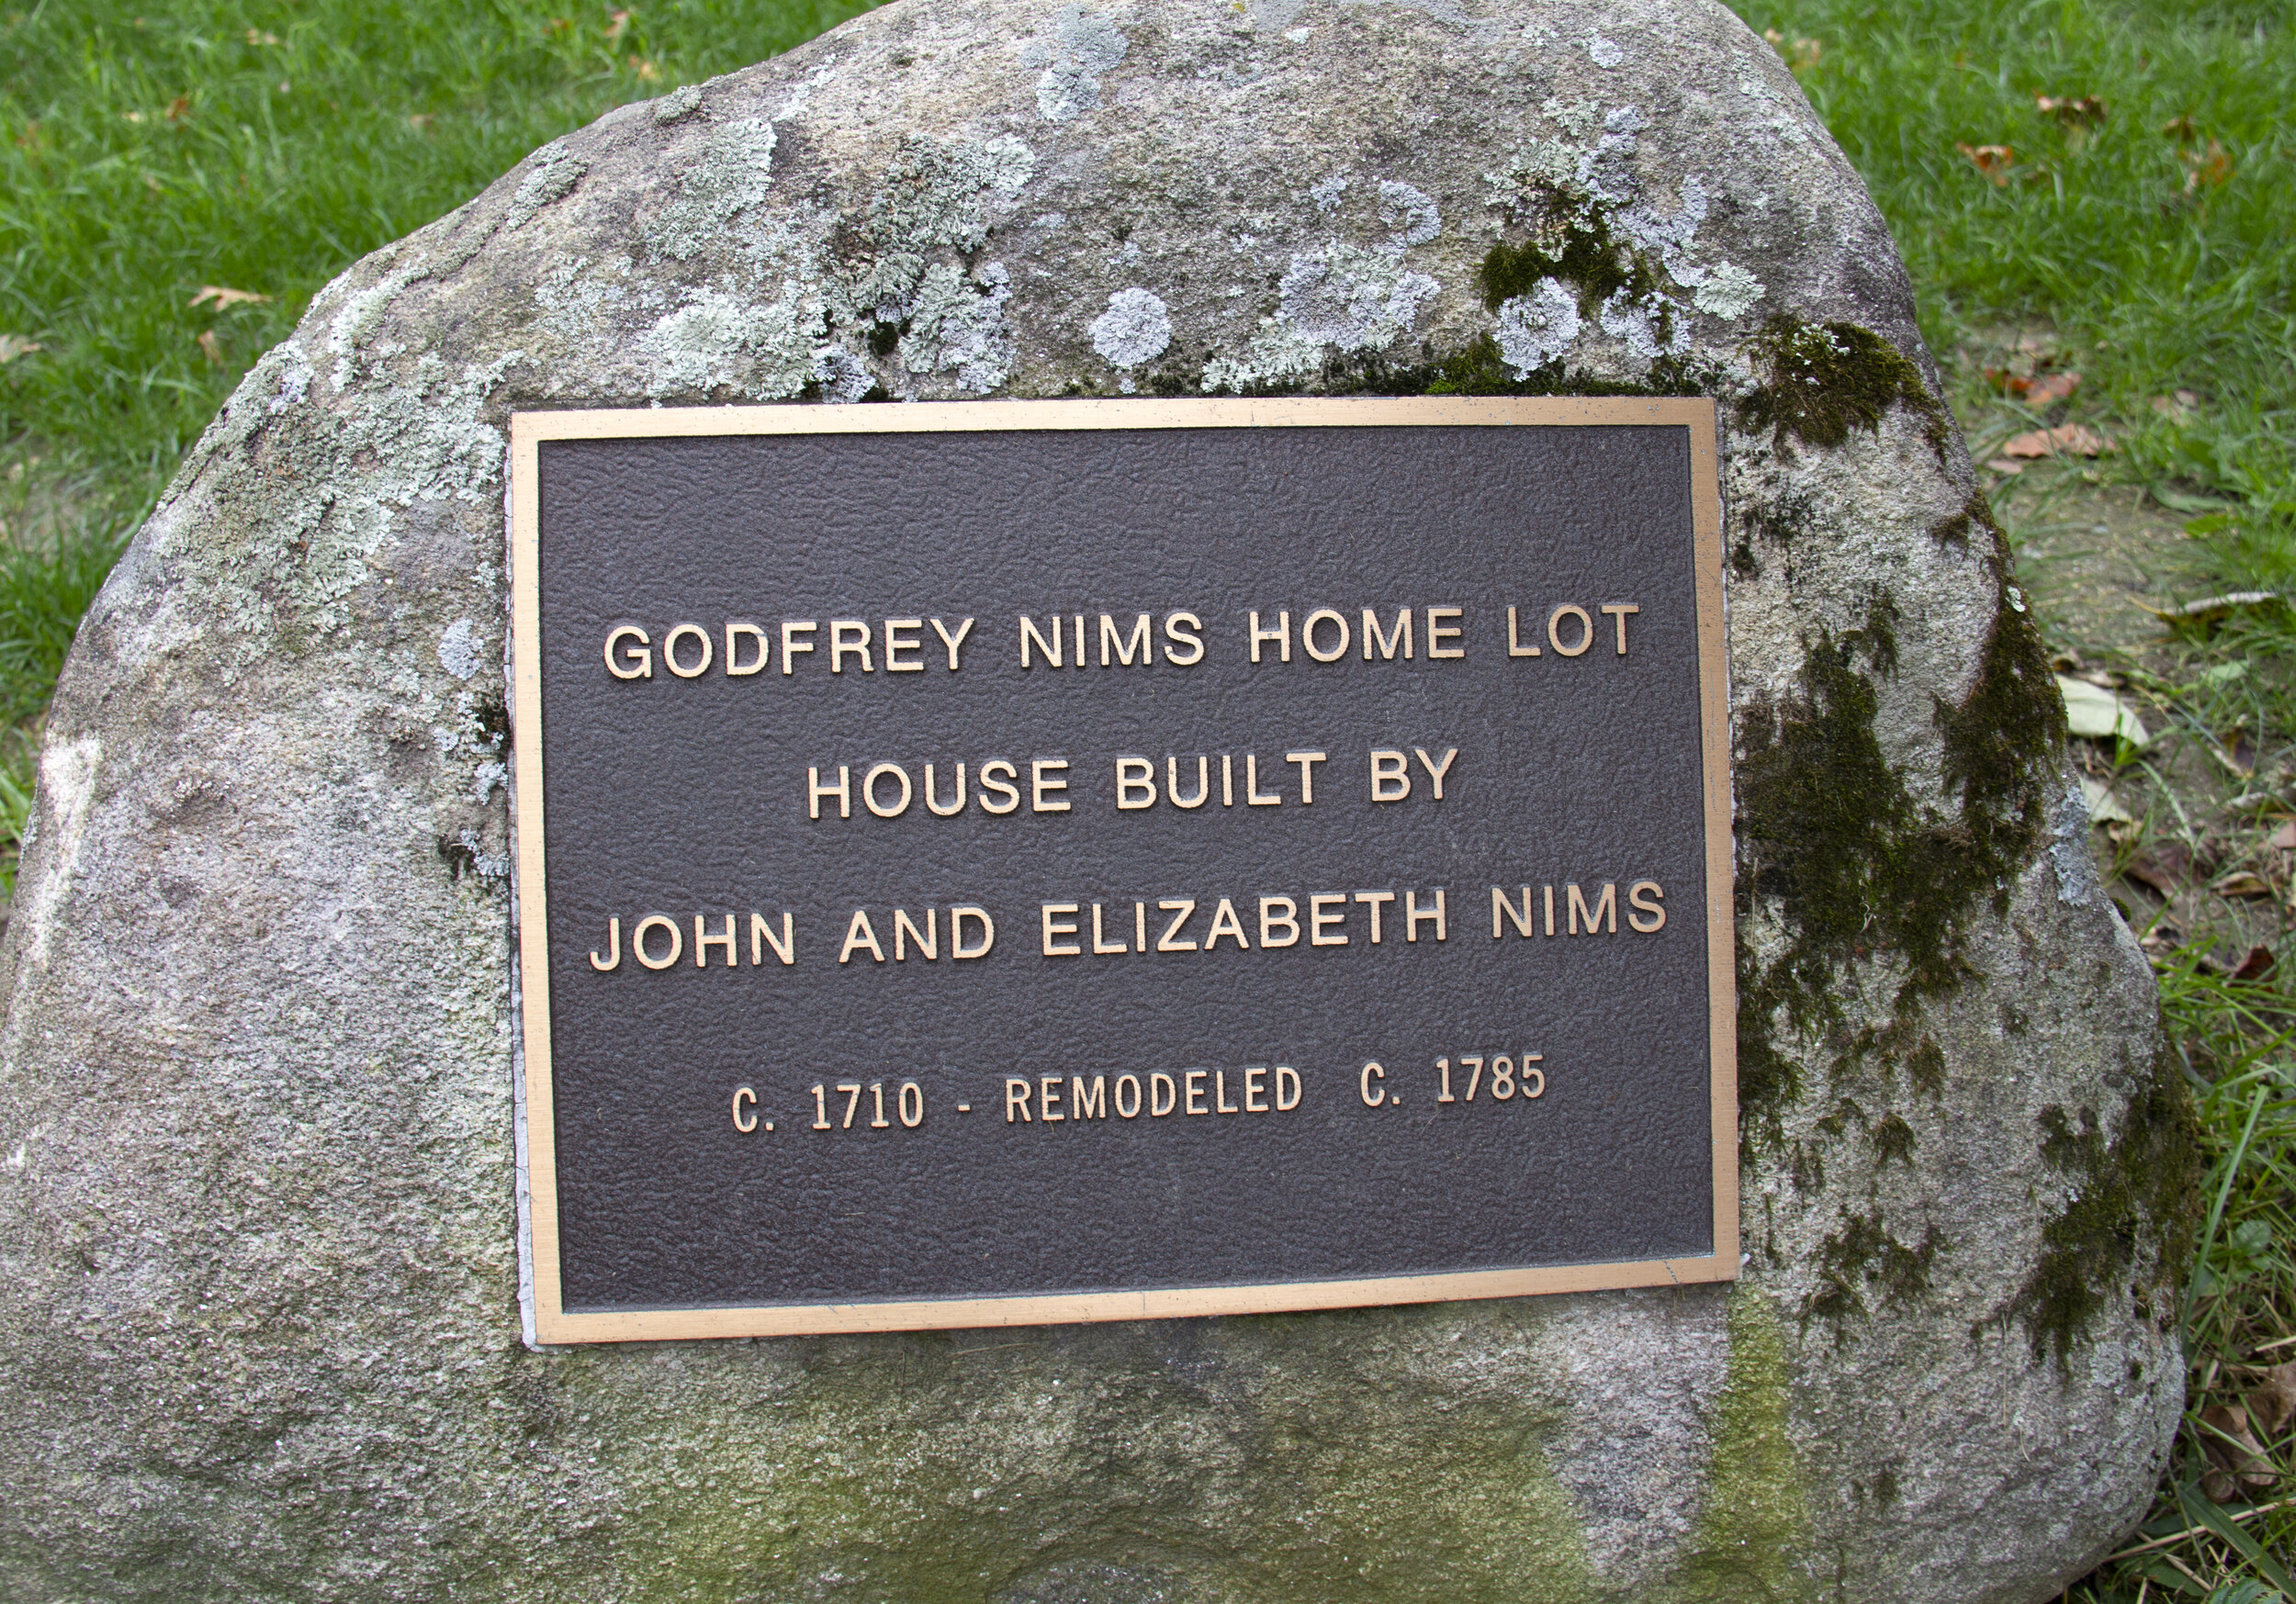 Godfrey Nims Home Lot, built c. 1710